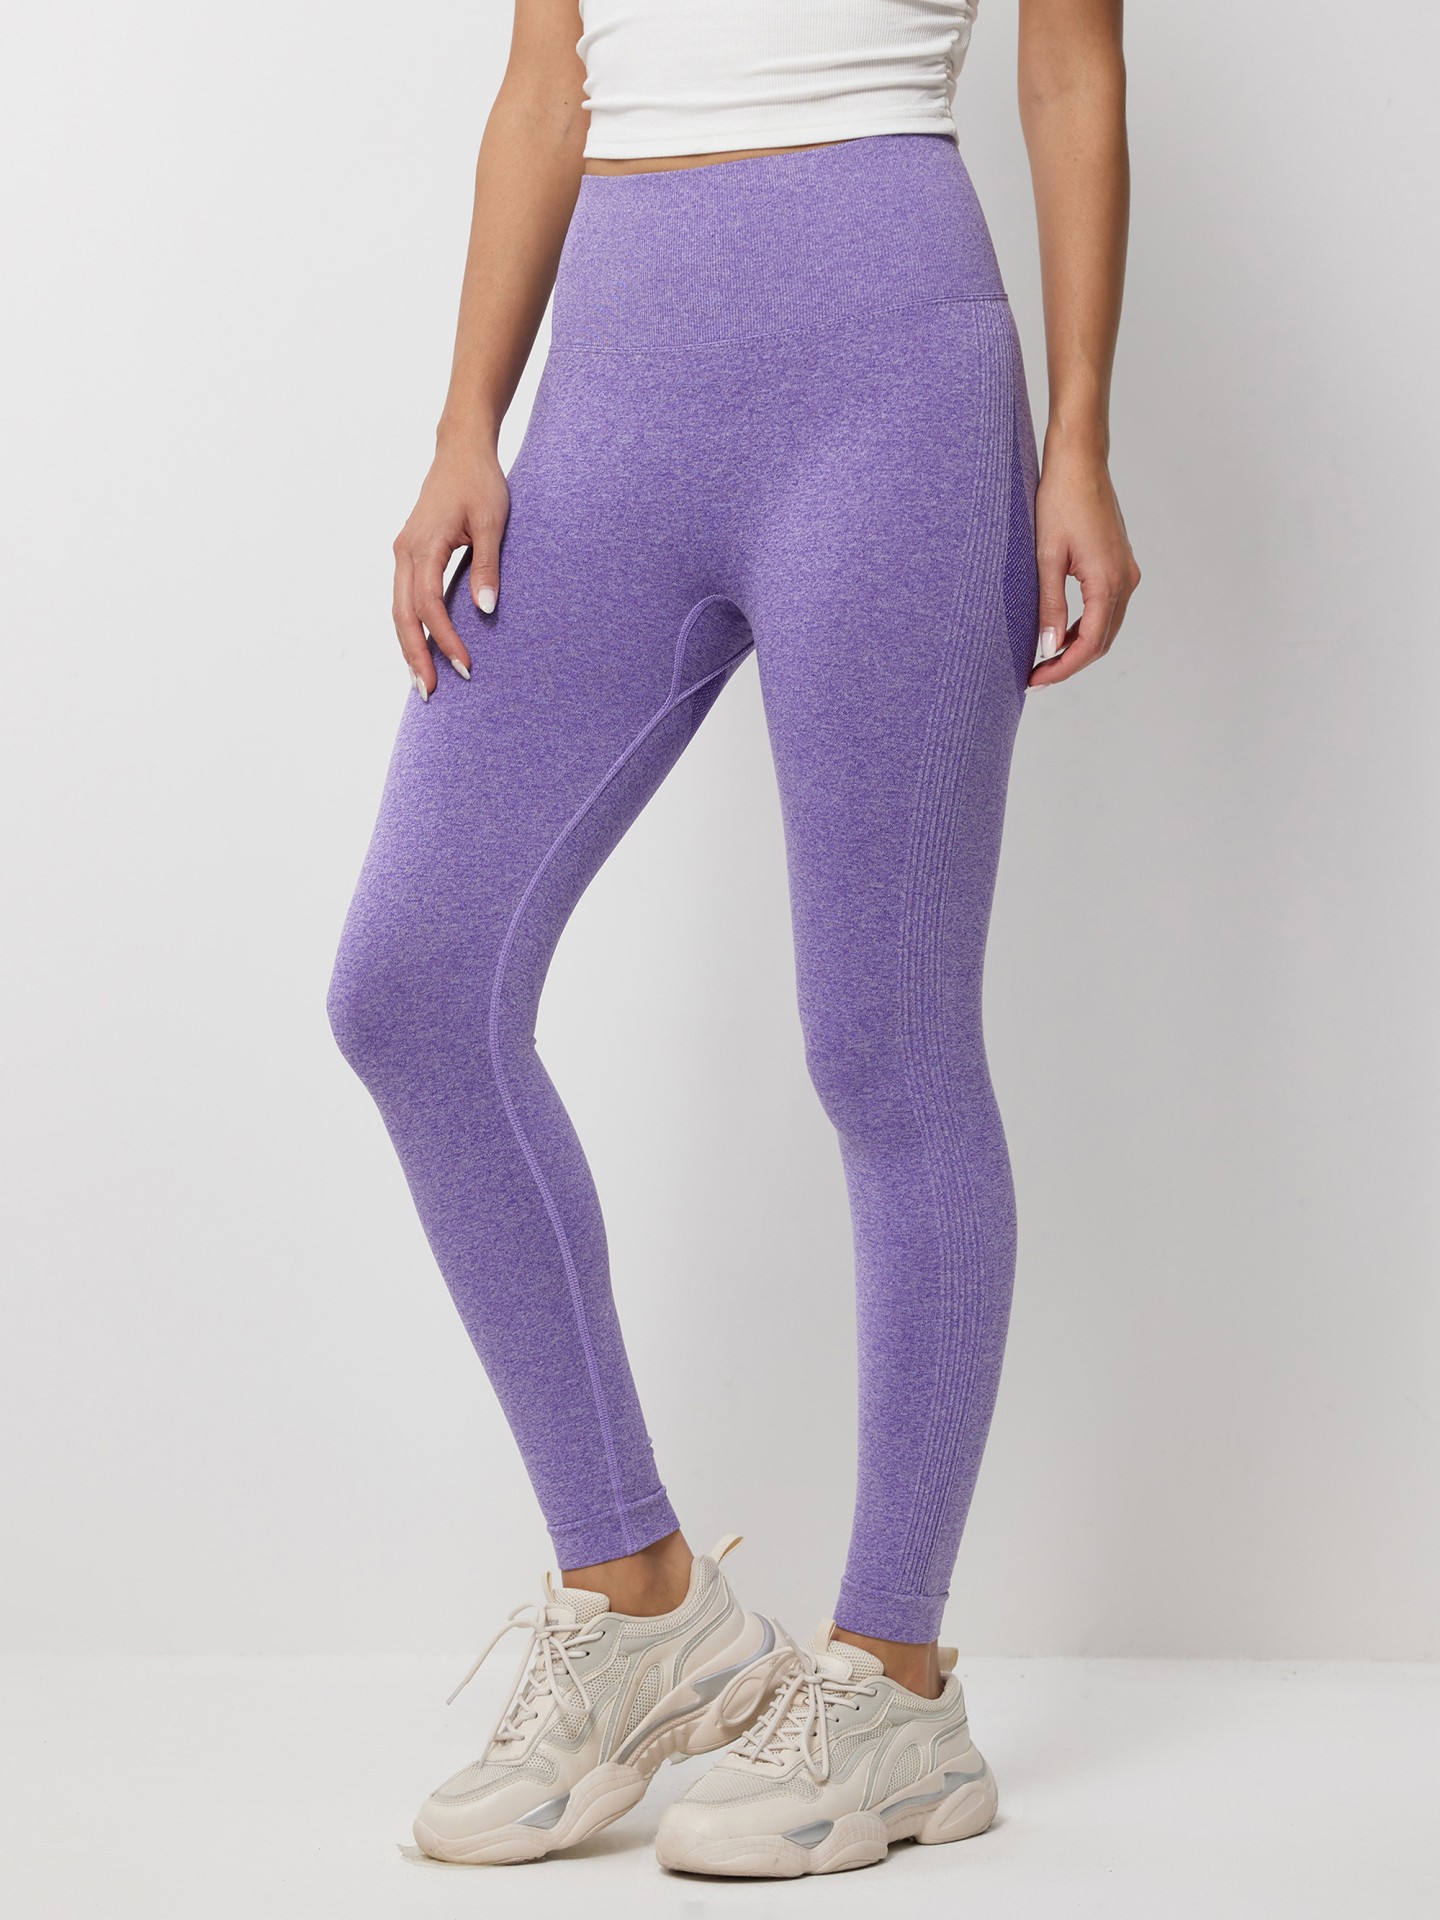 Women's Purple Solid Nylon Activewear Legging